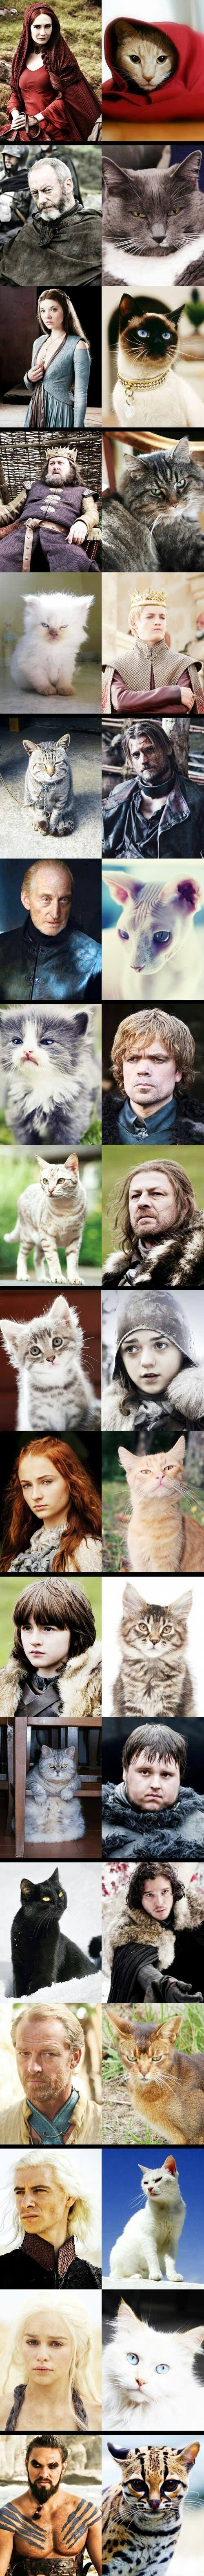 Cat of Thrones #CoT